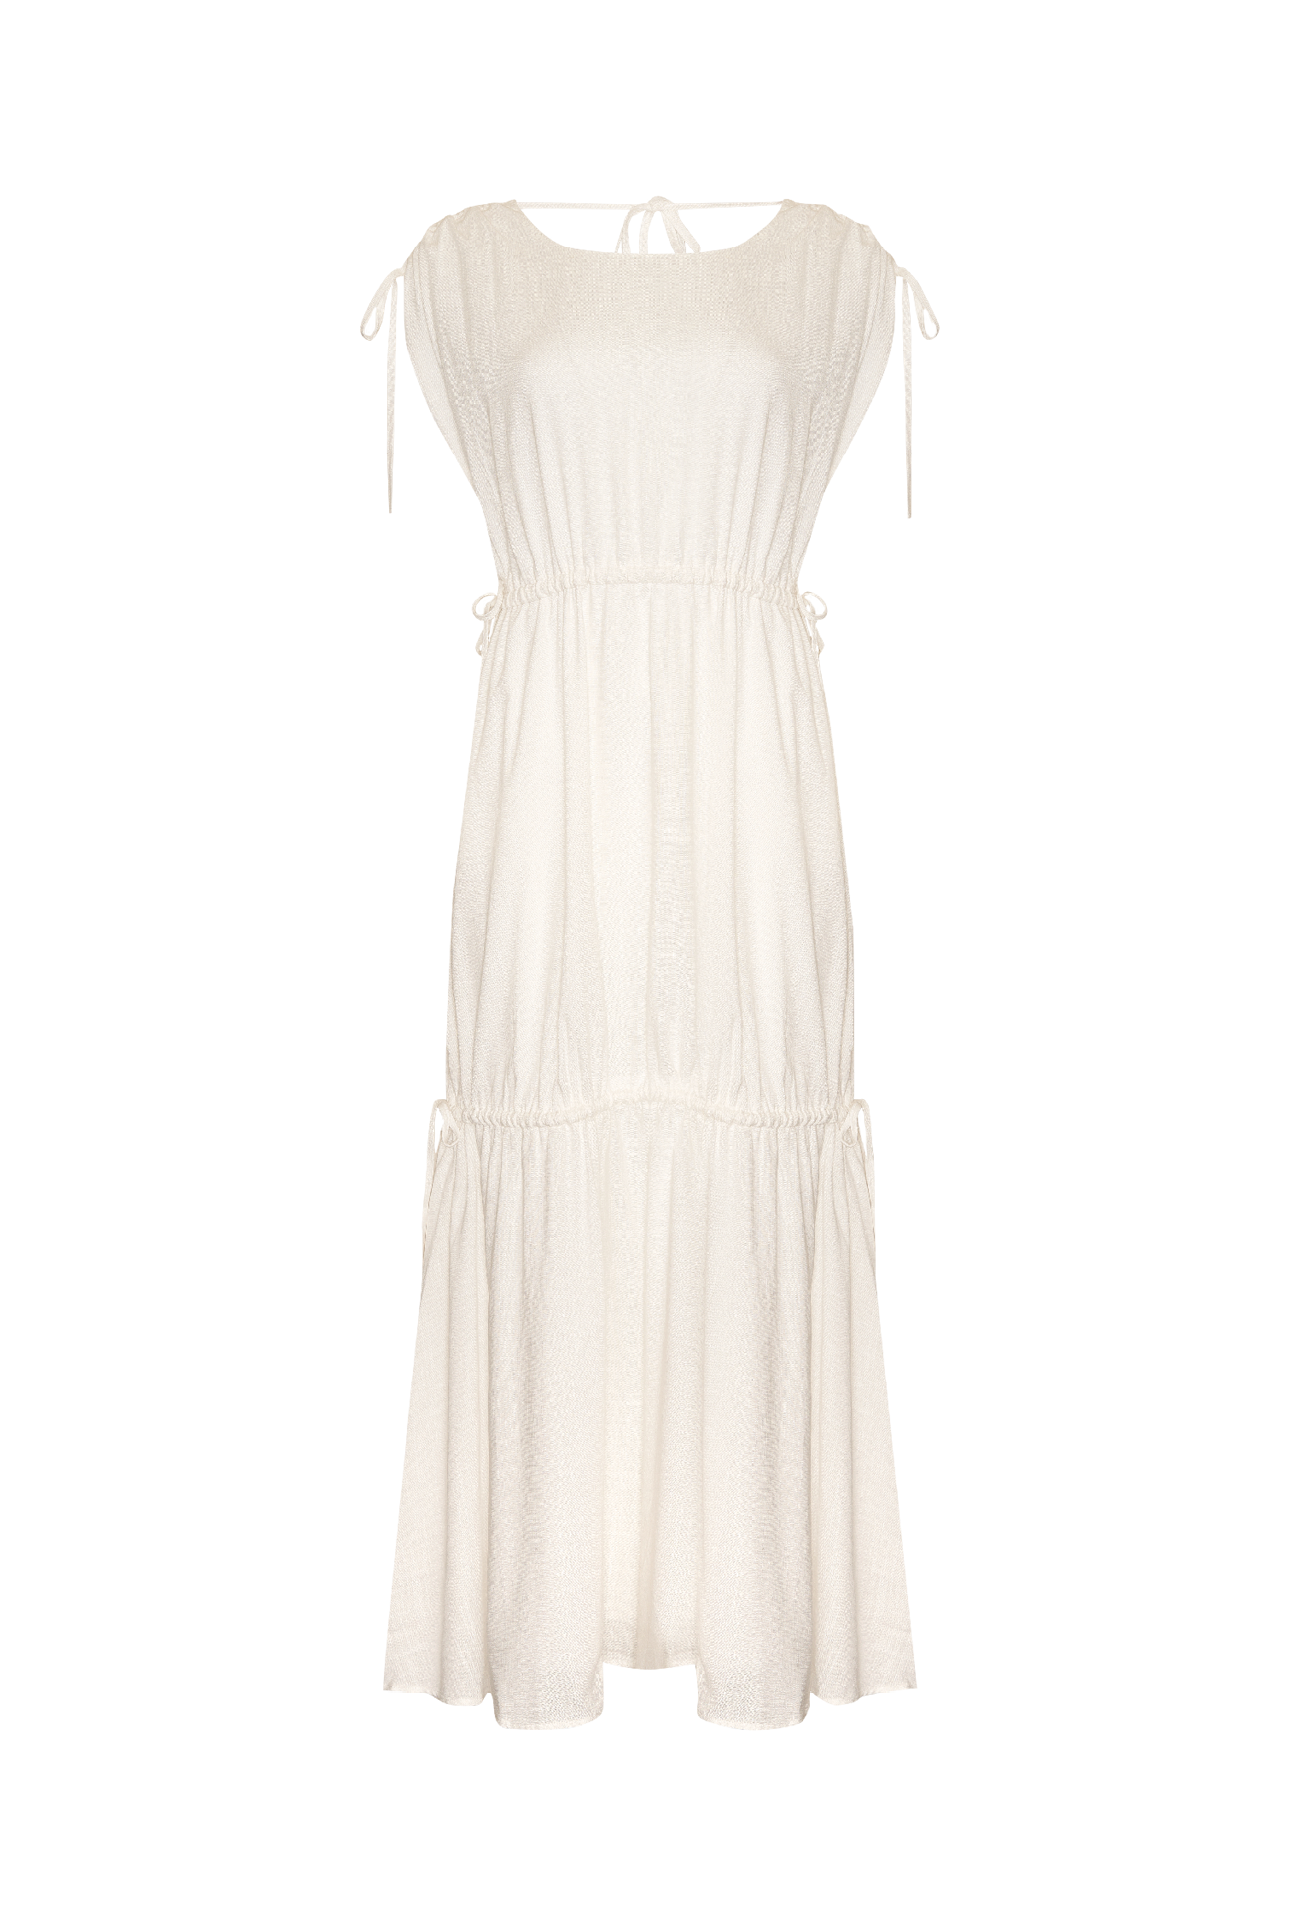 GROVE MAXI DRESS - WHITE